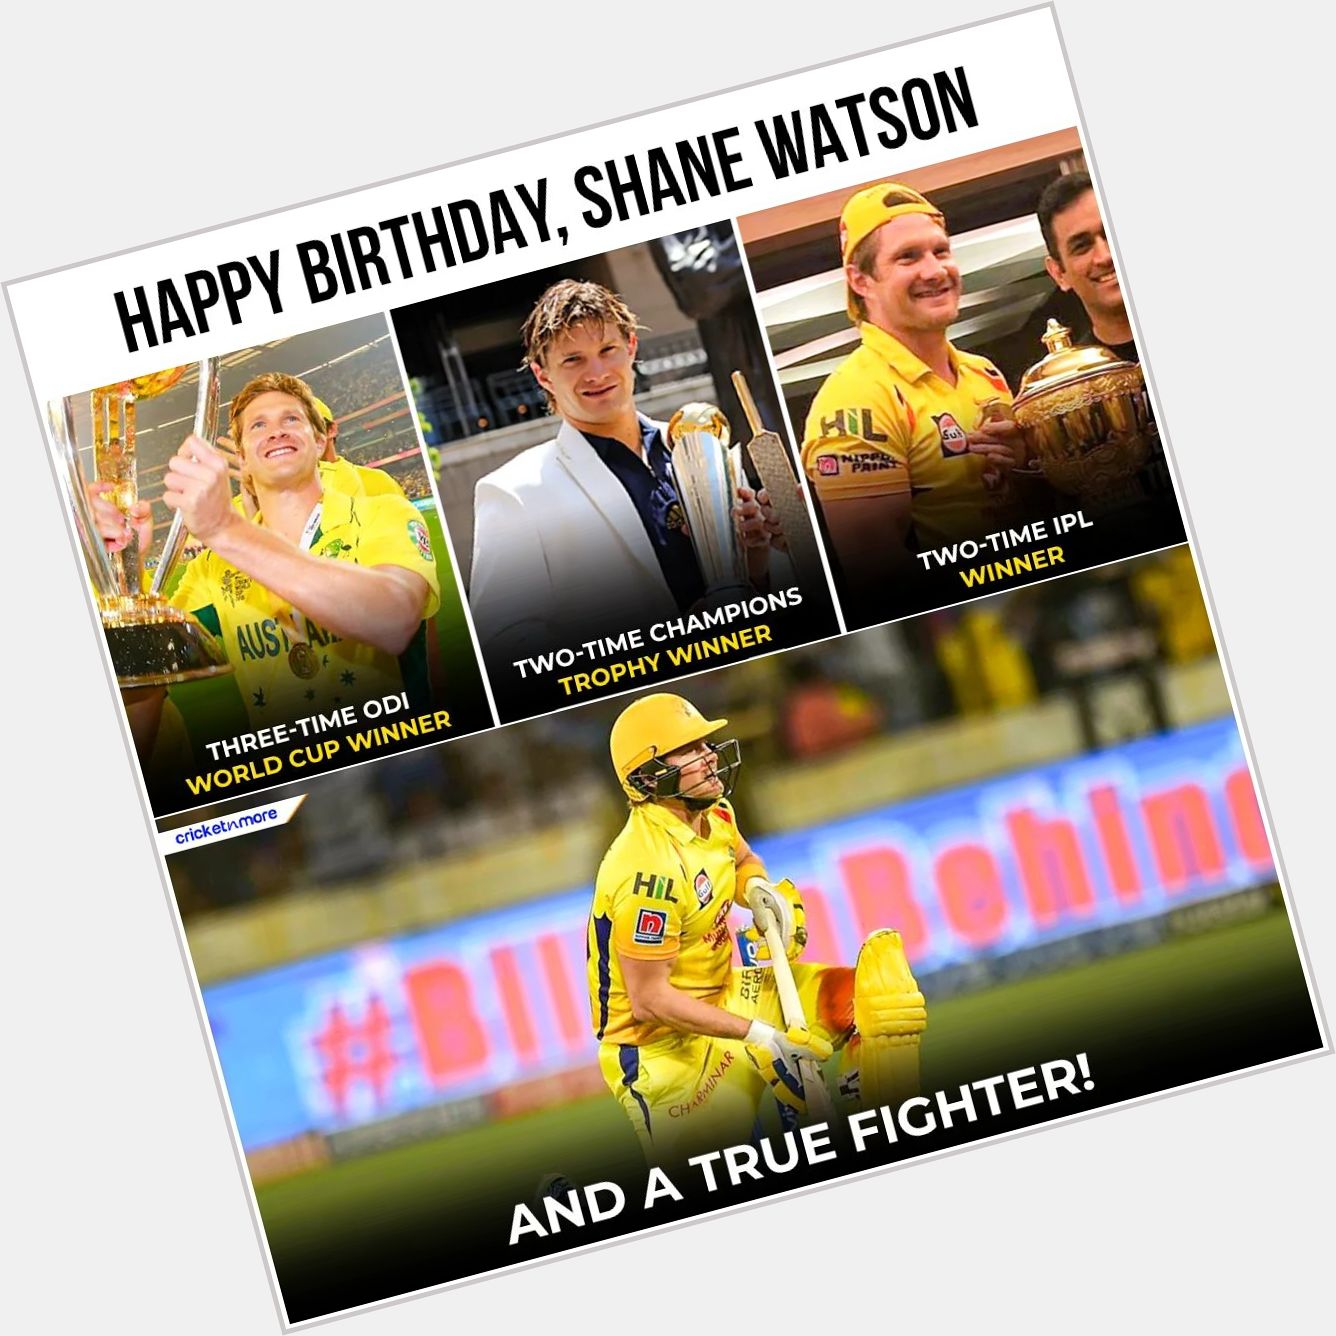 Wishing Shane Watson a very Happy Birthday! 